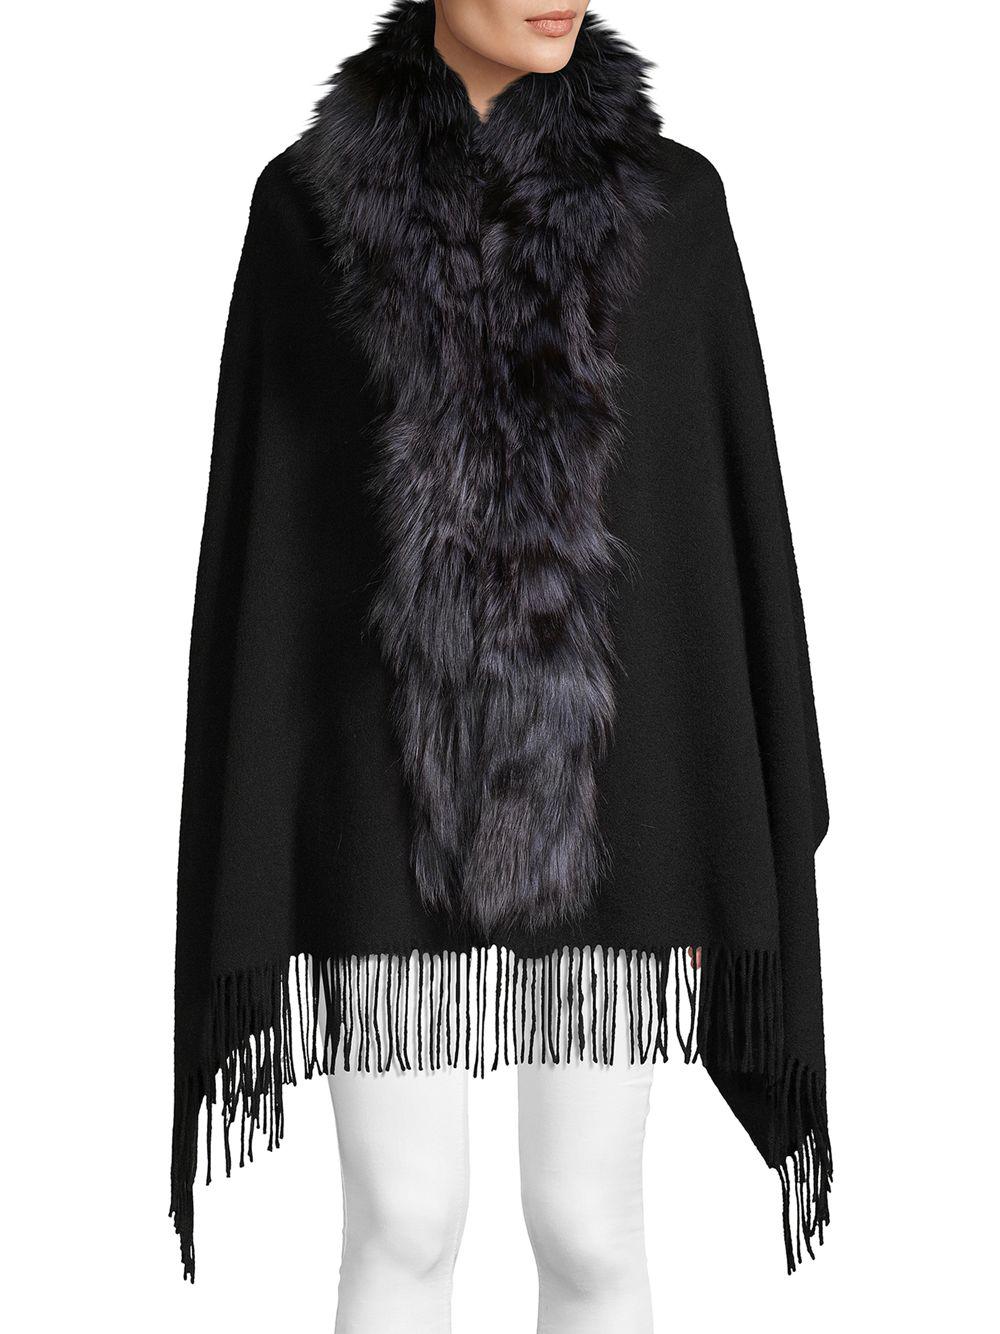 Belle Fare Dyed Fox Fur Trim Cashmere Wool Shawl in Black - Lyst